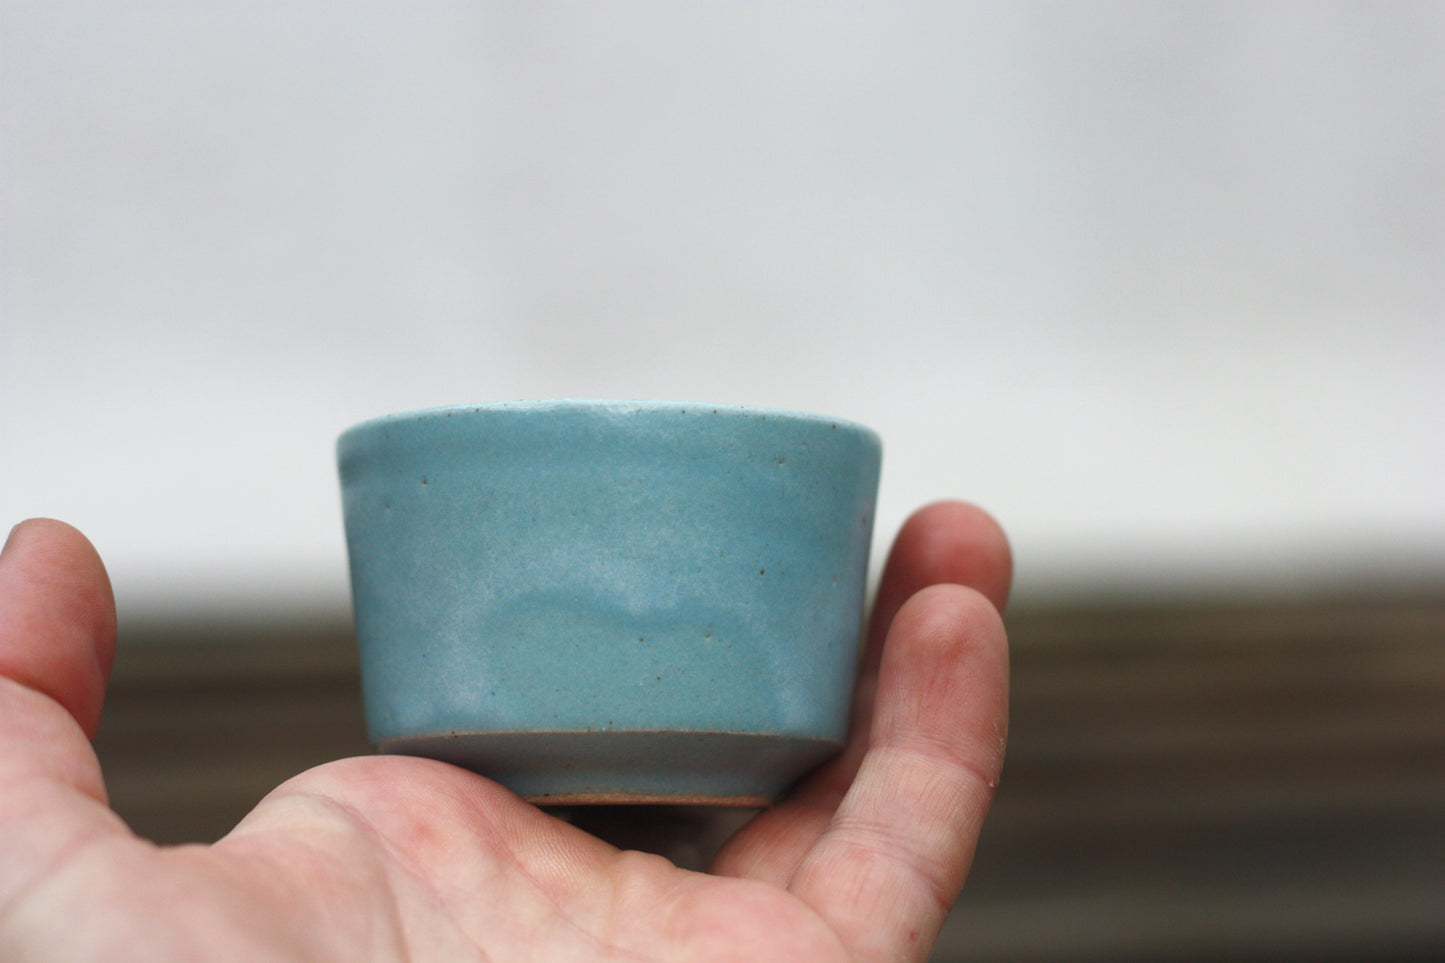 Small Pottery handmade stacking ceramic pots